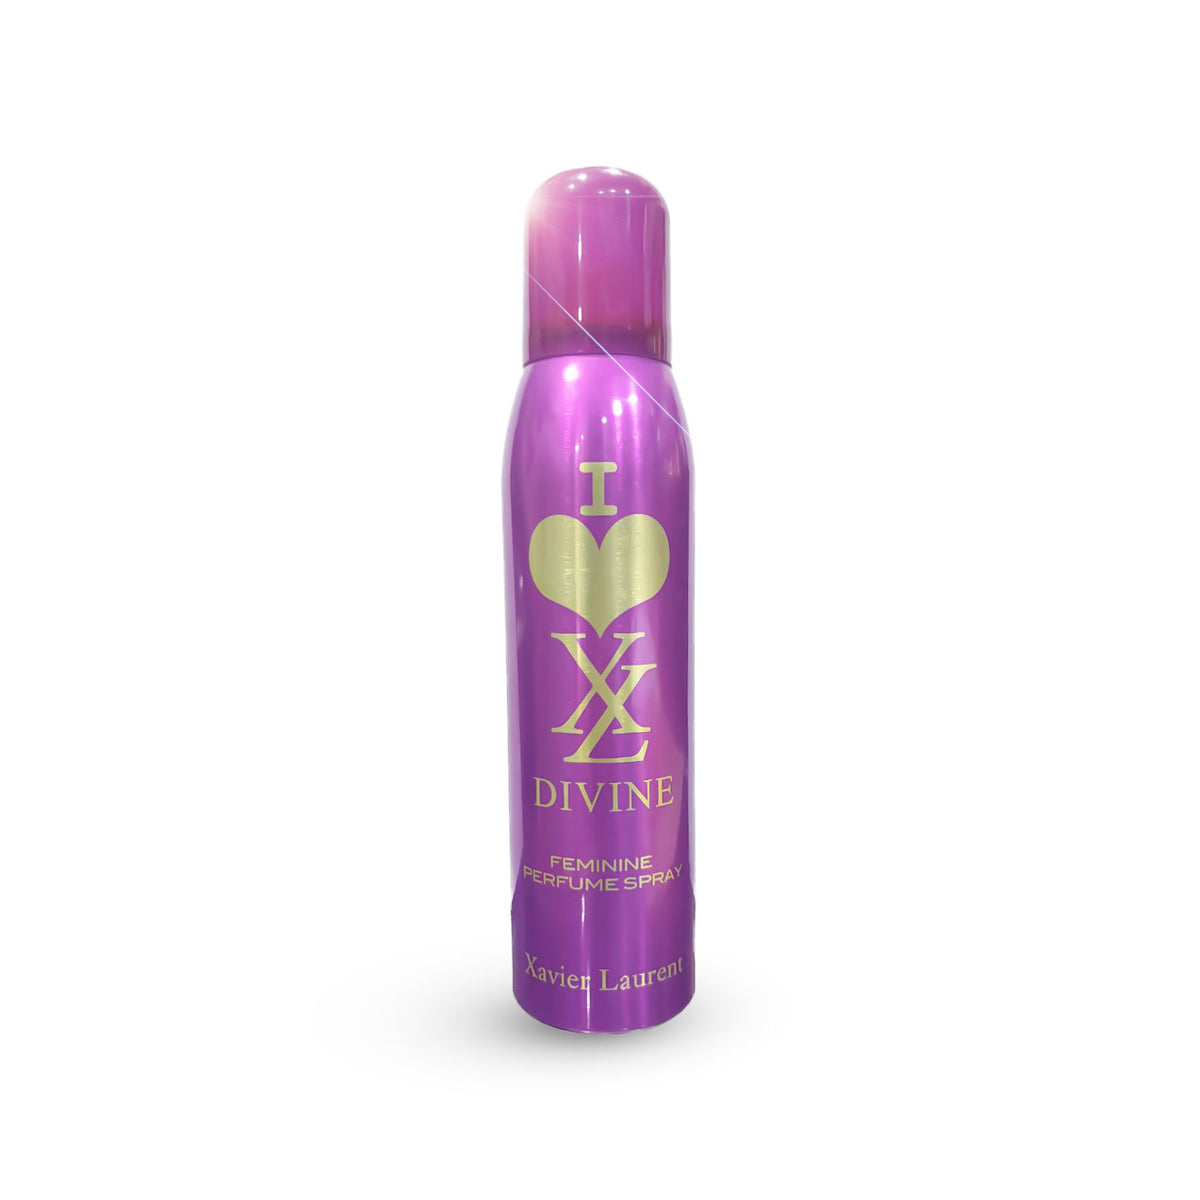 Xavier Laurent XL Divine Perfume Spray For Women -150ml